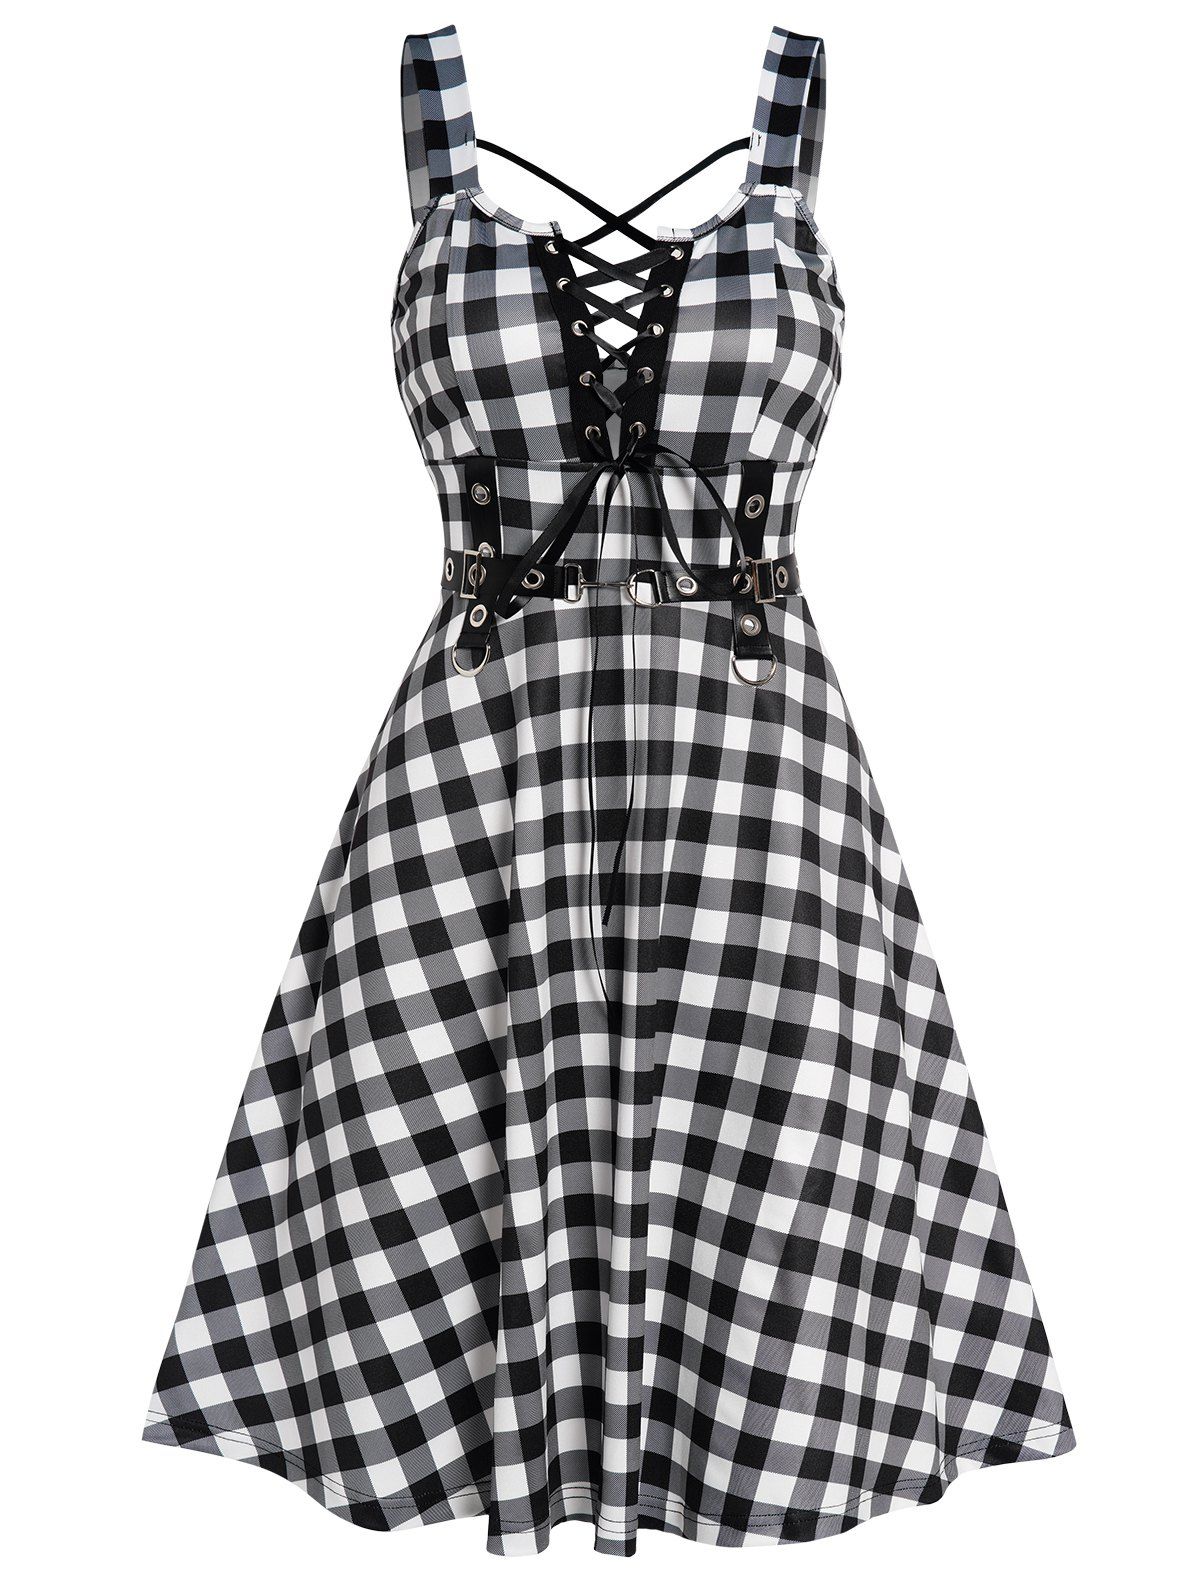 Plaid Print Dress Crisscross Lace Up Grommet High Waisted Sleeveless A Line Mini Dress - BLACK L